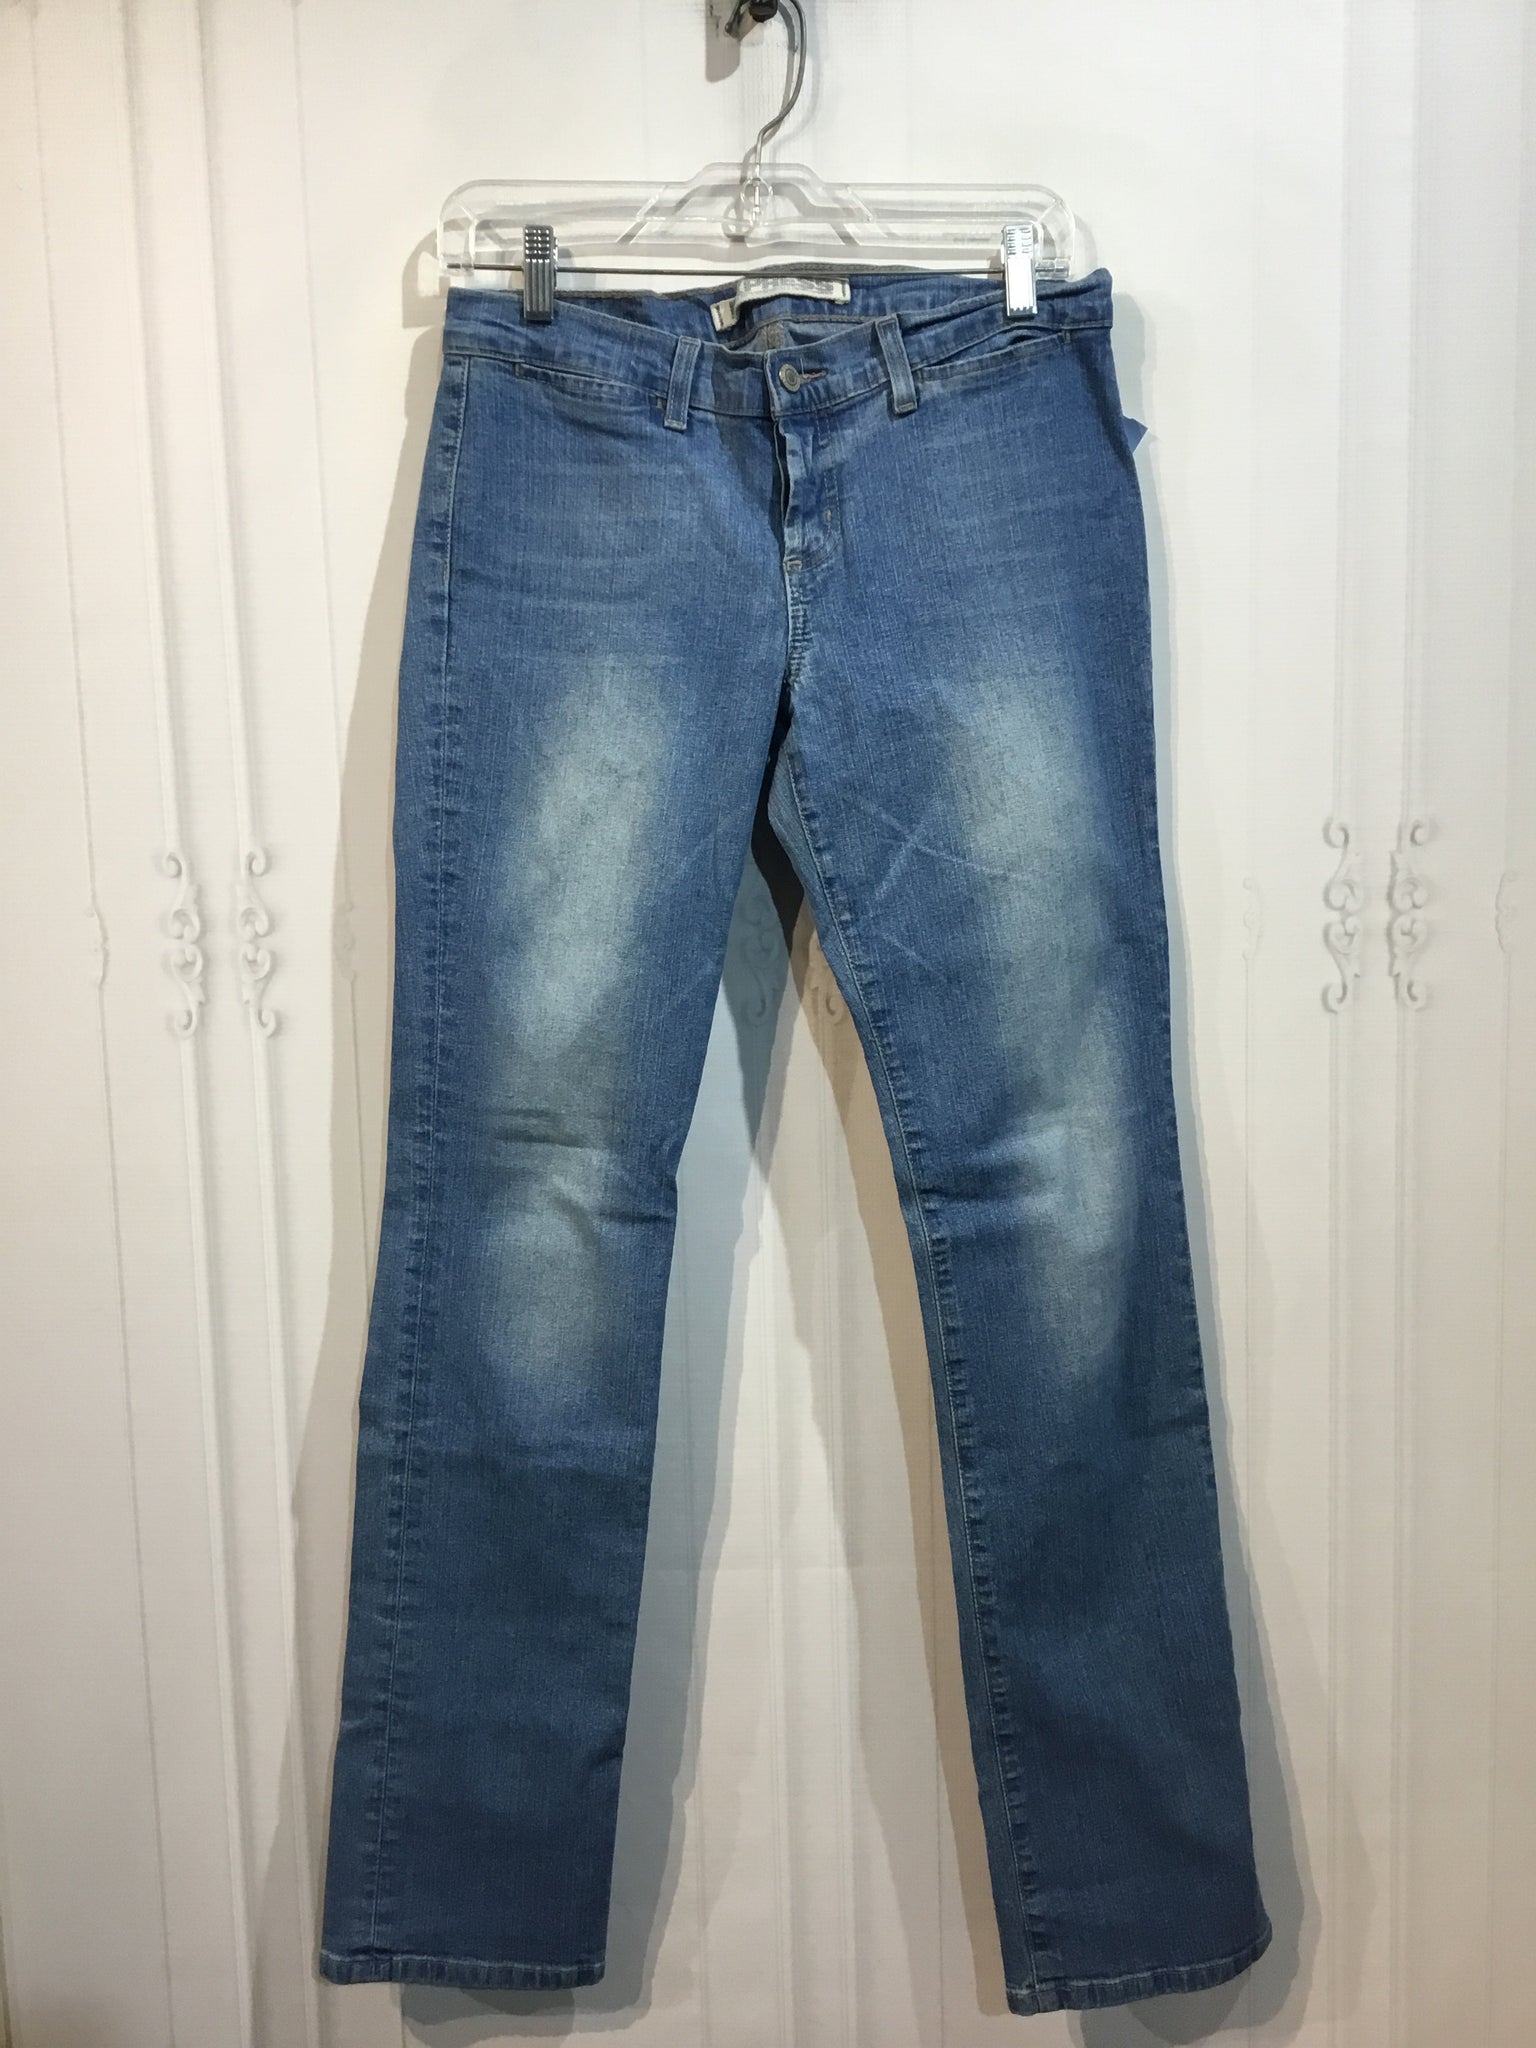 Express Size S/4-6 Denim Jeans